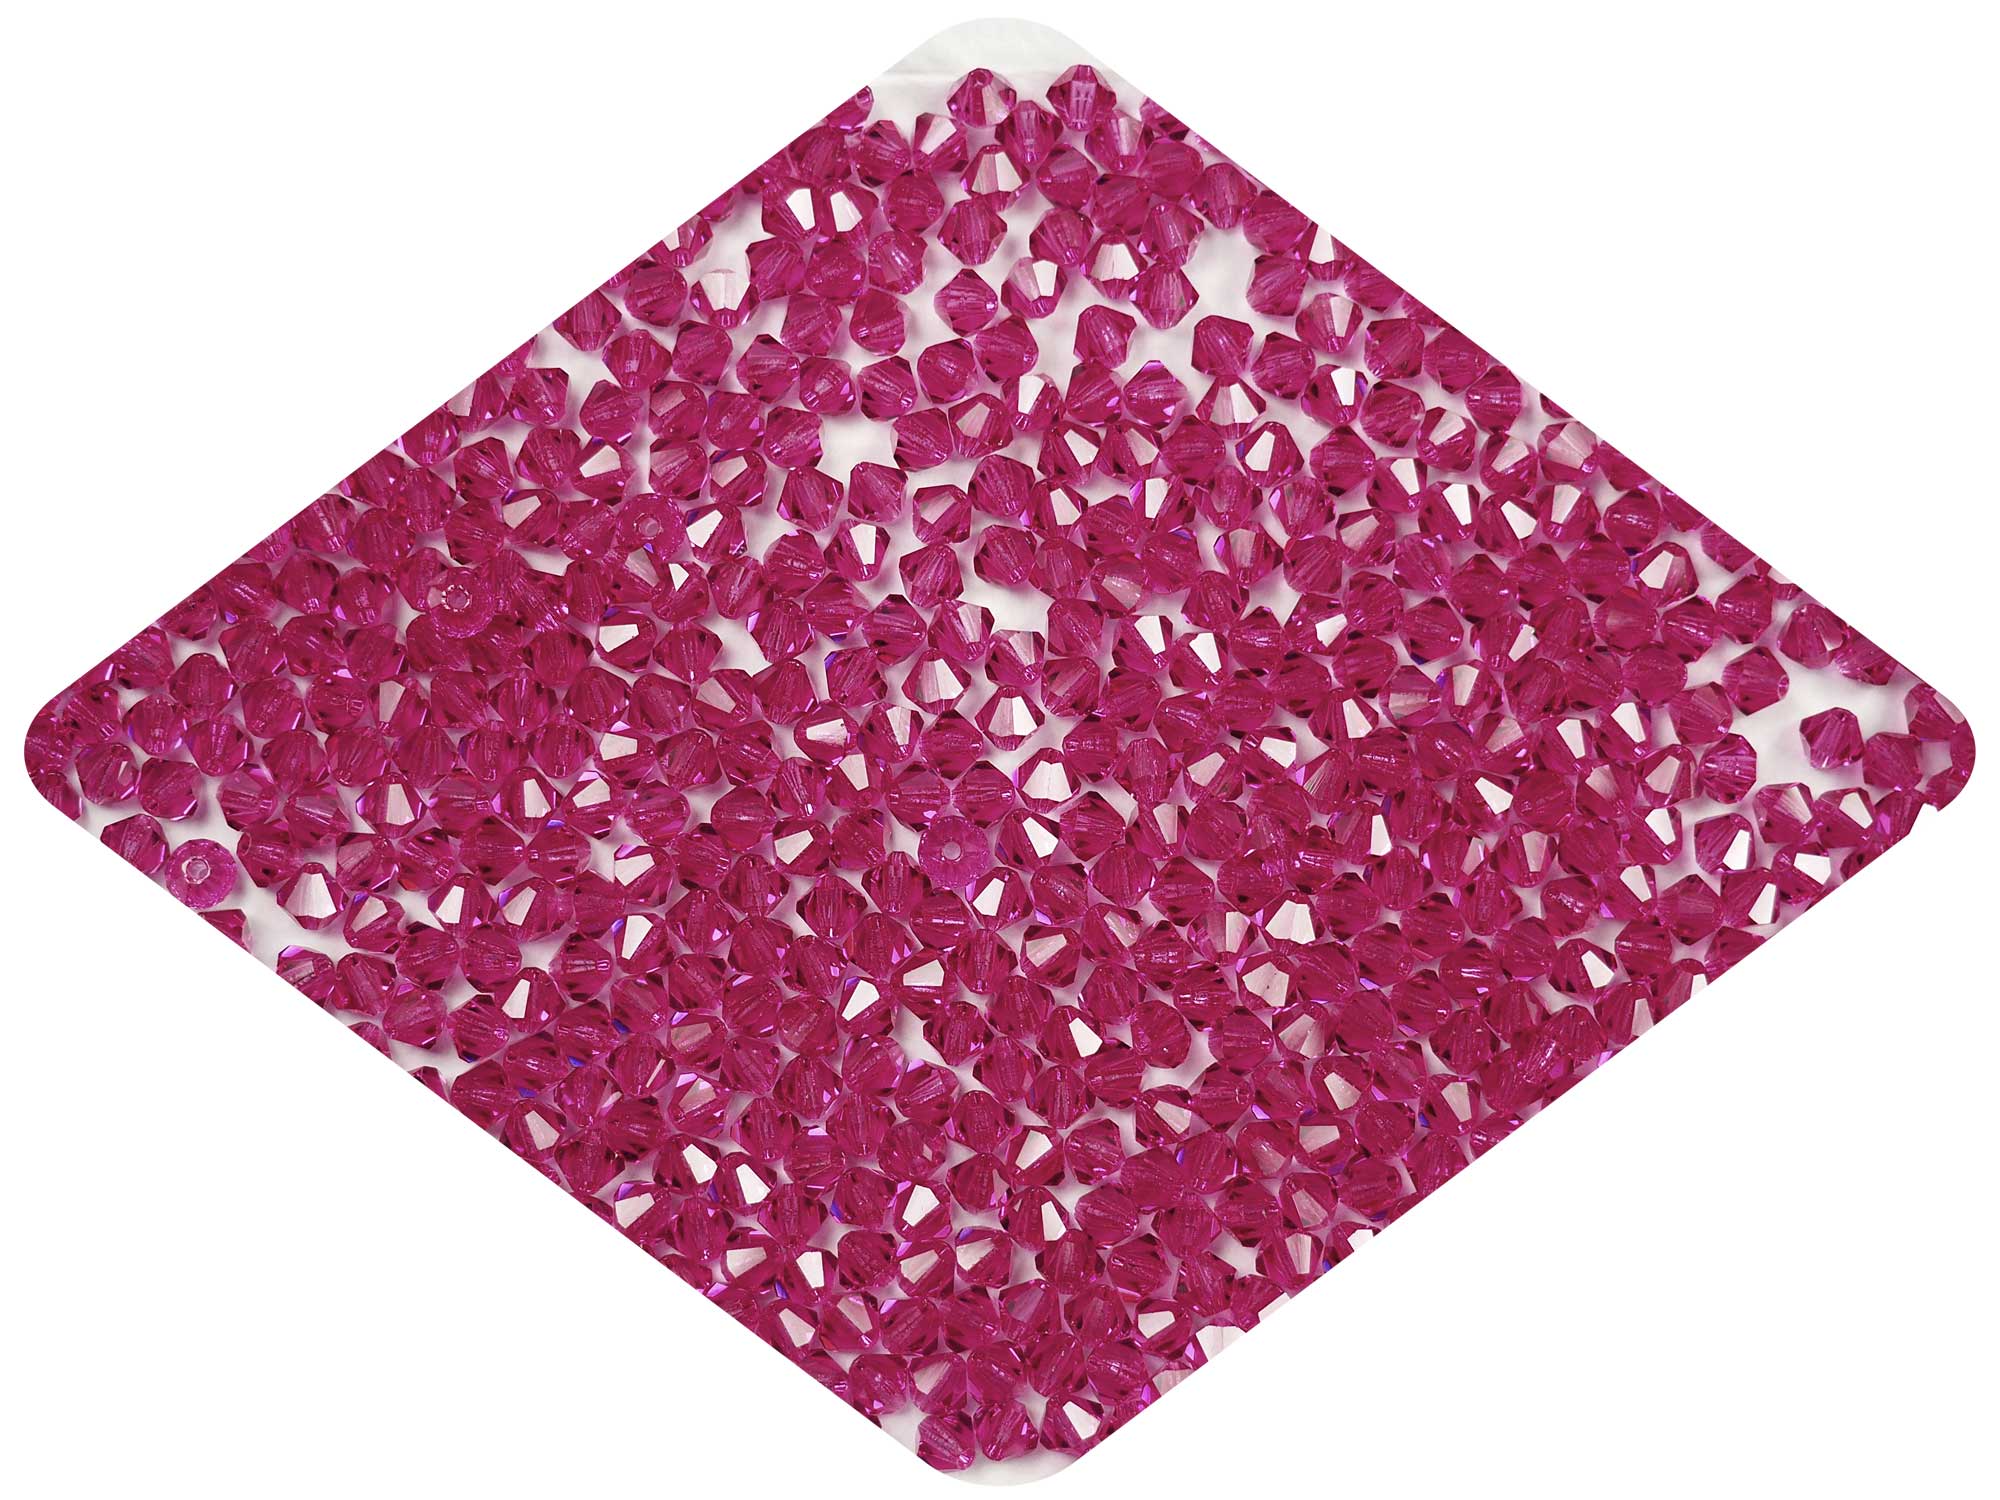 Fuchsia (Preciosa color), Czech Glass Beads, Machine Cut Bicones (MC Rondell, Diamond Shape), hot pink crystals